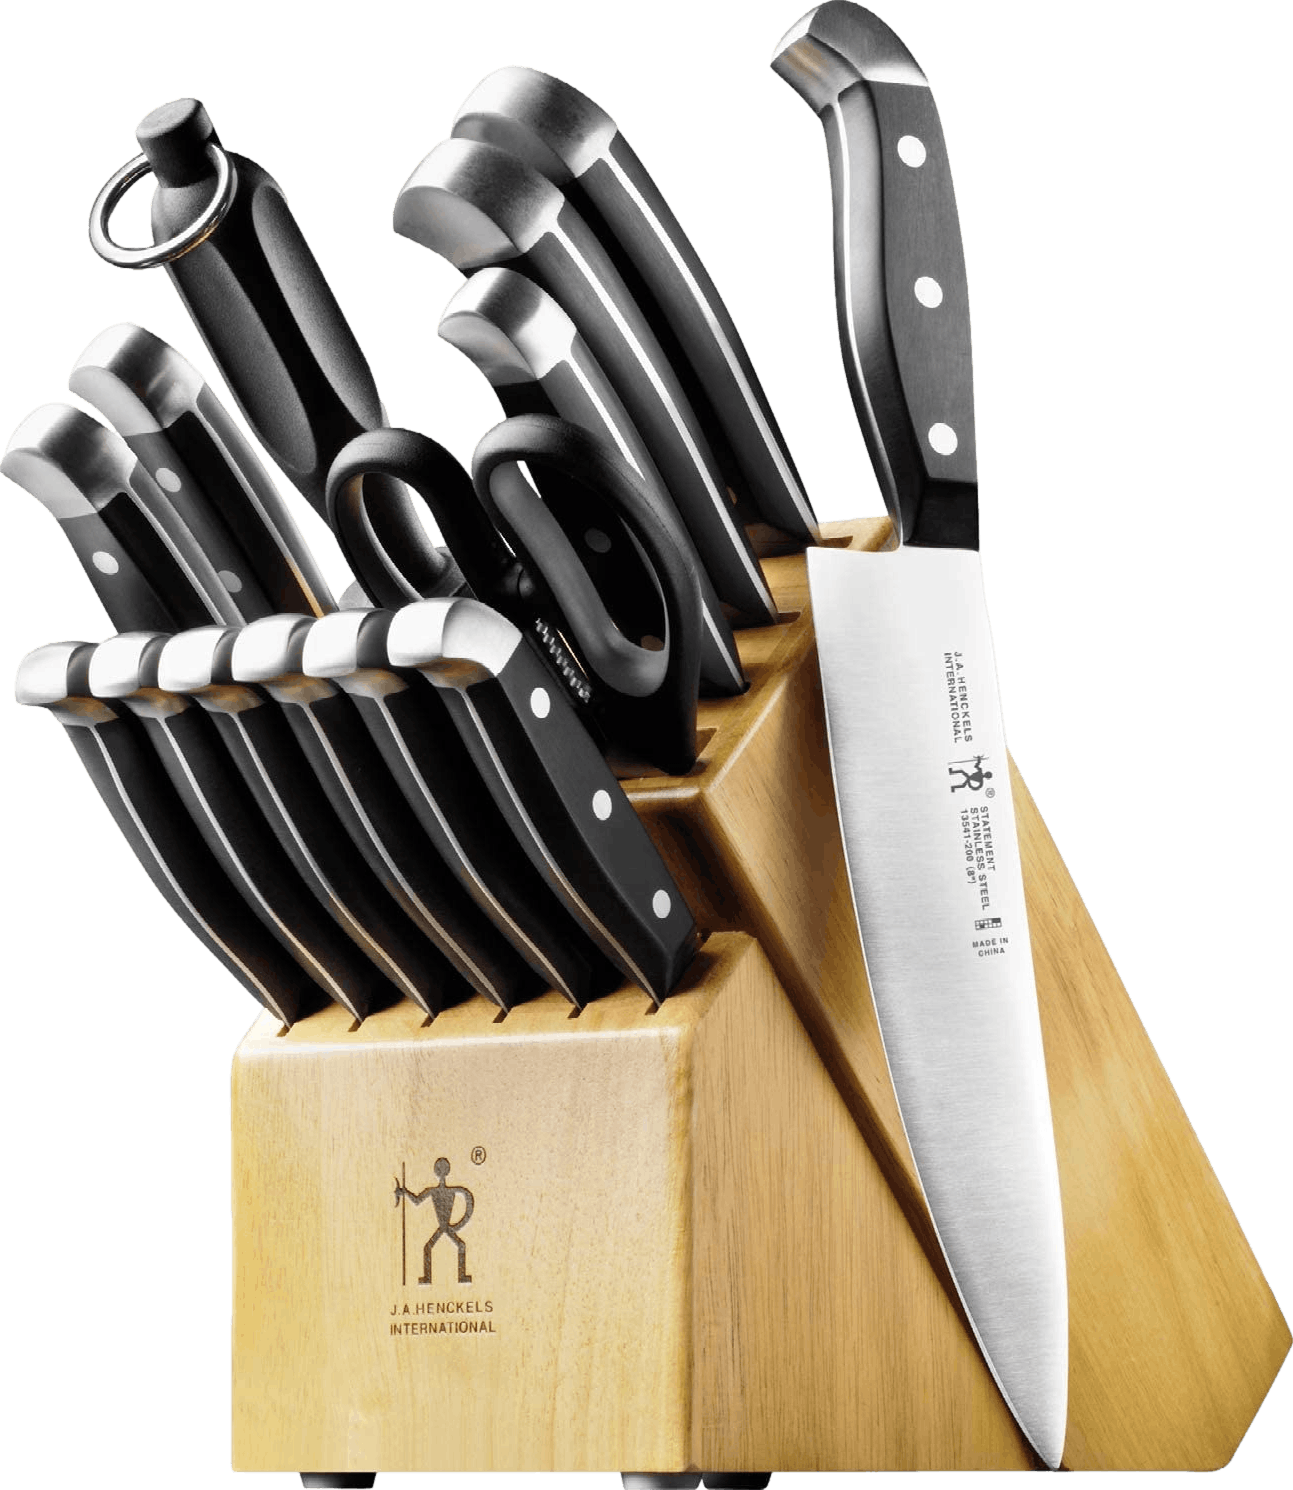  HENCKELS Statement 14-piece Self-Sharpening Knife Set with Block,  Chef Knife, Paring Knife, Bread Knife, Steak Knife Set, Dark Brown,  Stainless Steel: Home & Kitchen